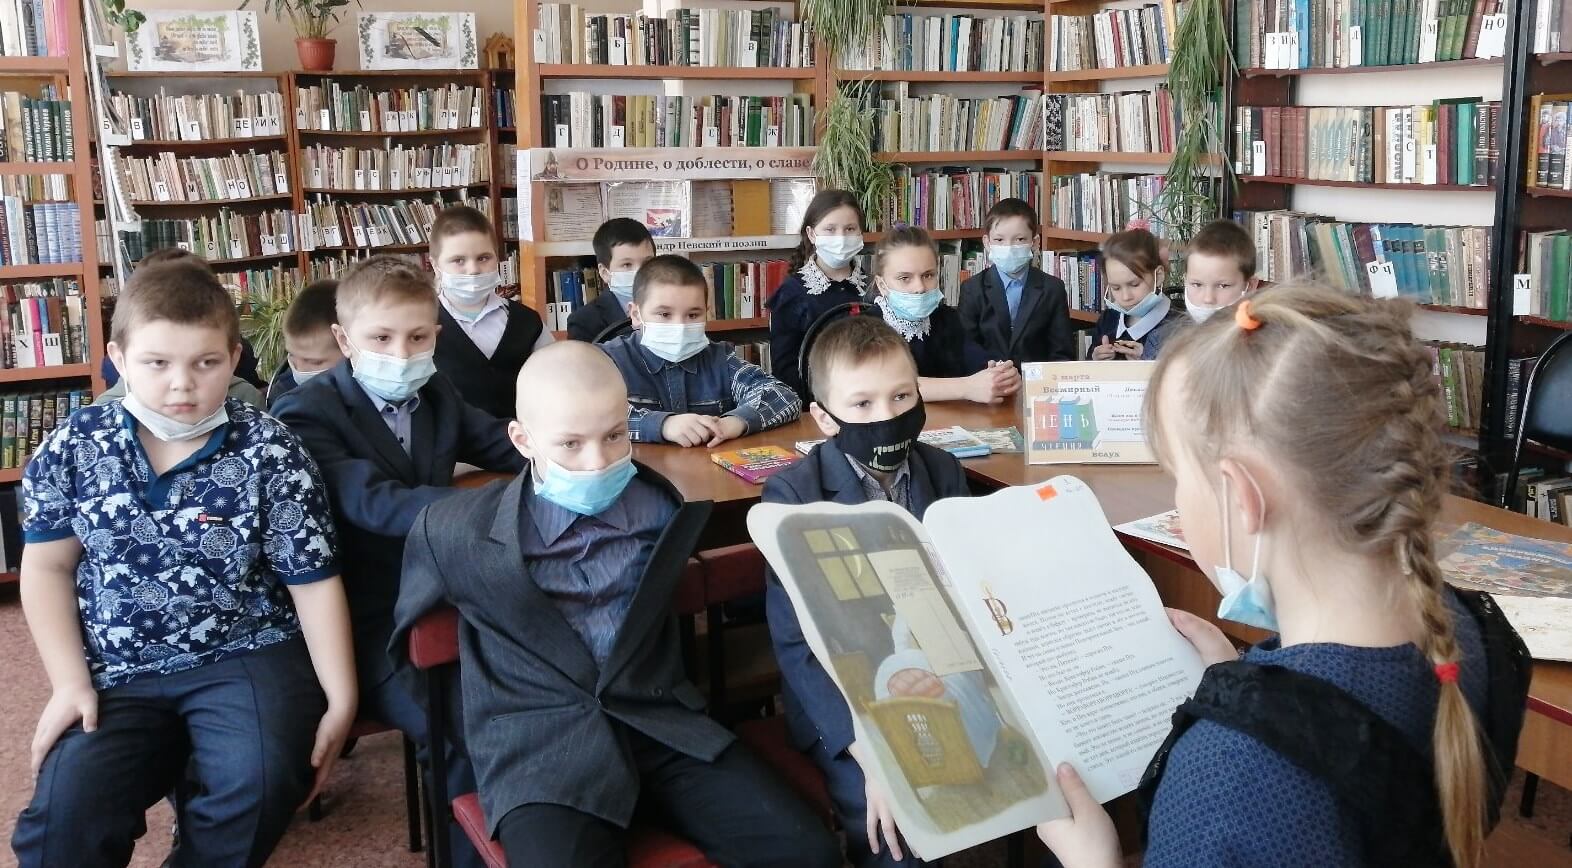 Parfenovo day of reading aloud